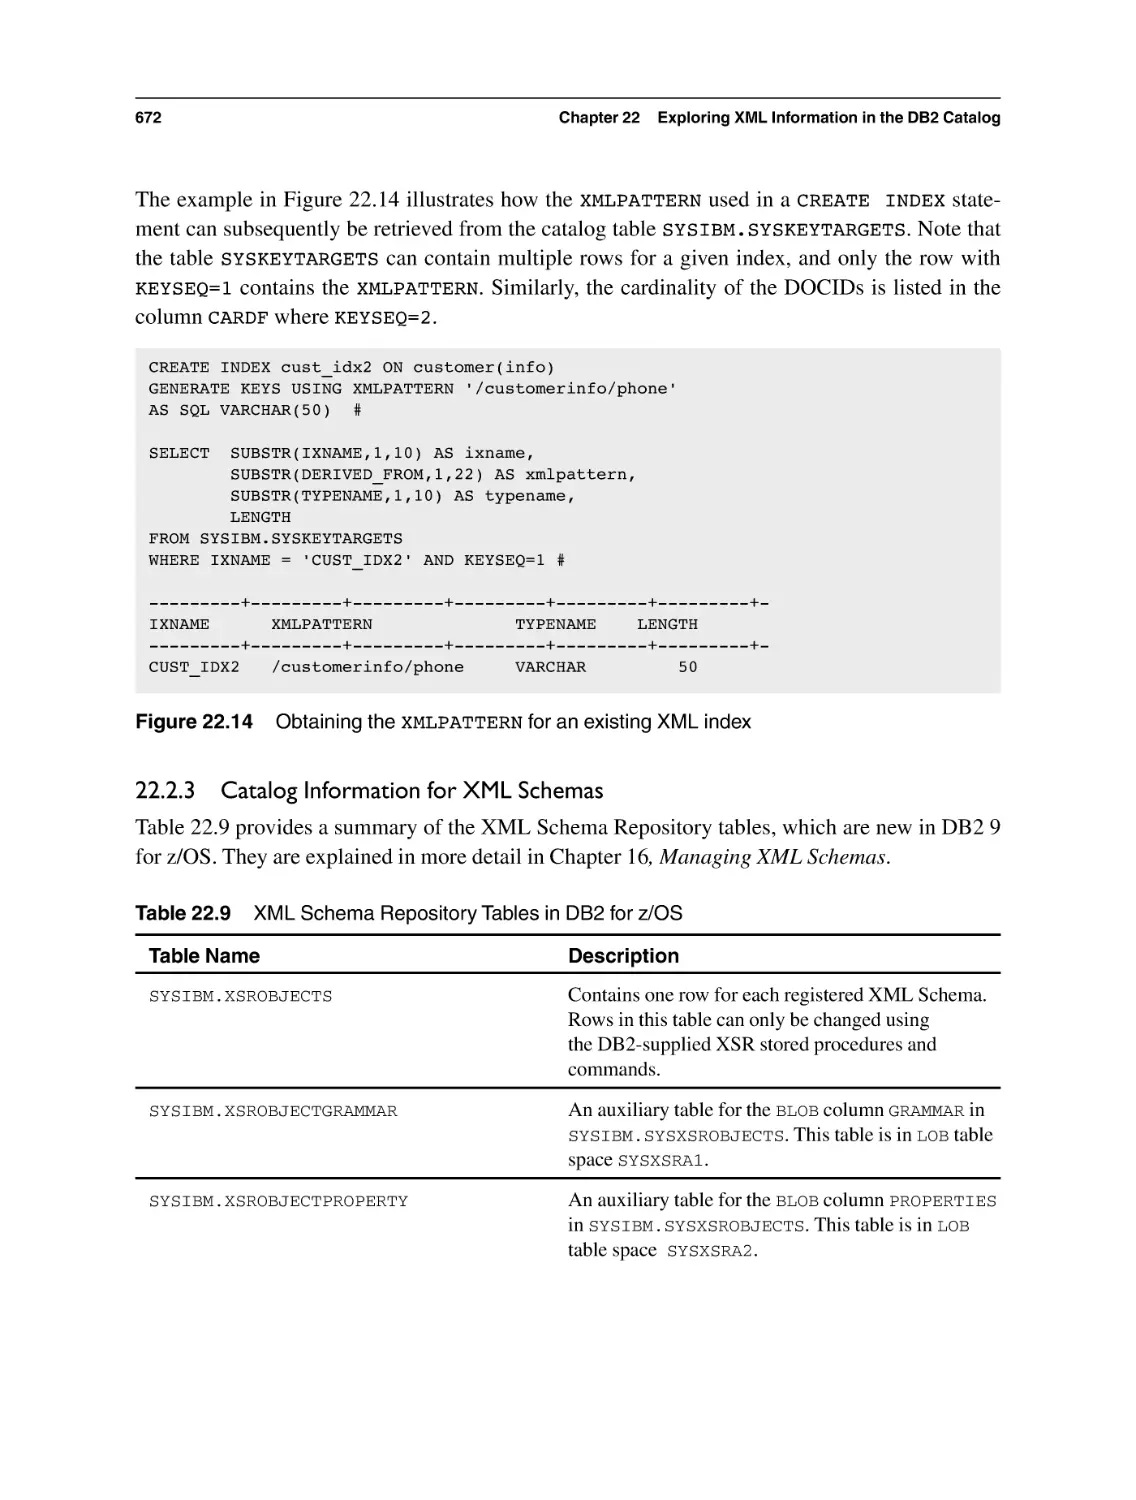 22.2.3 Catalog Information for XML Schemas